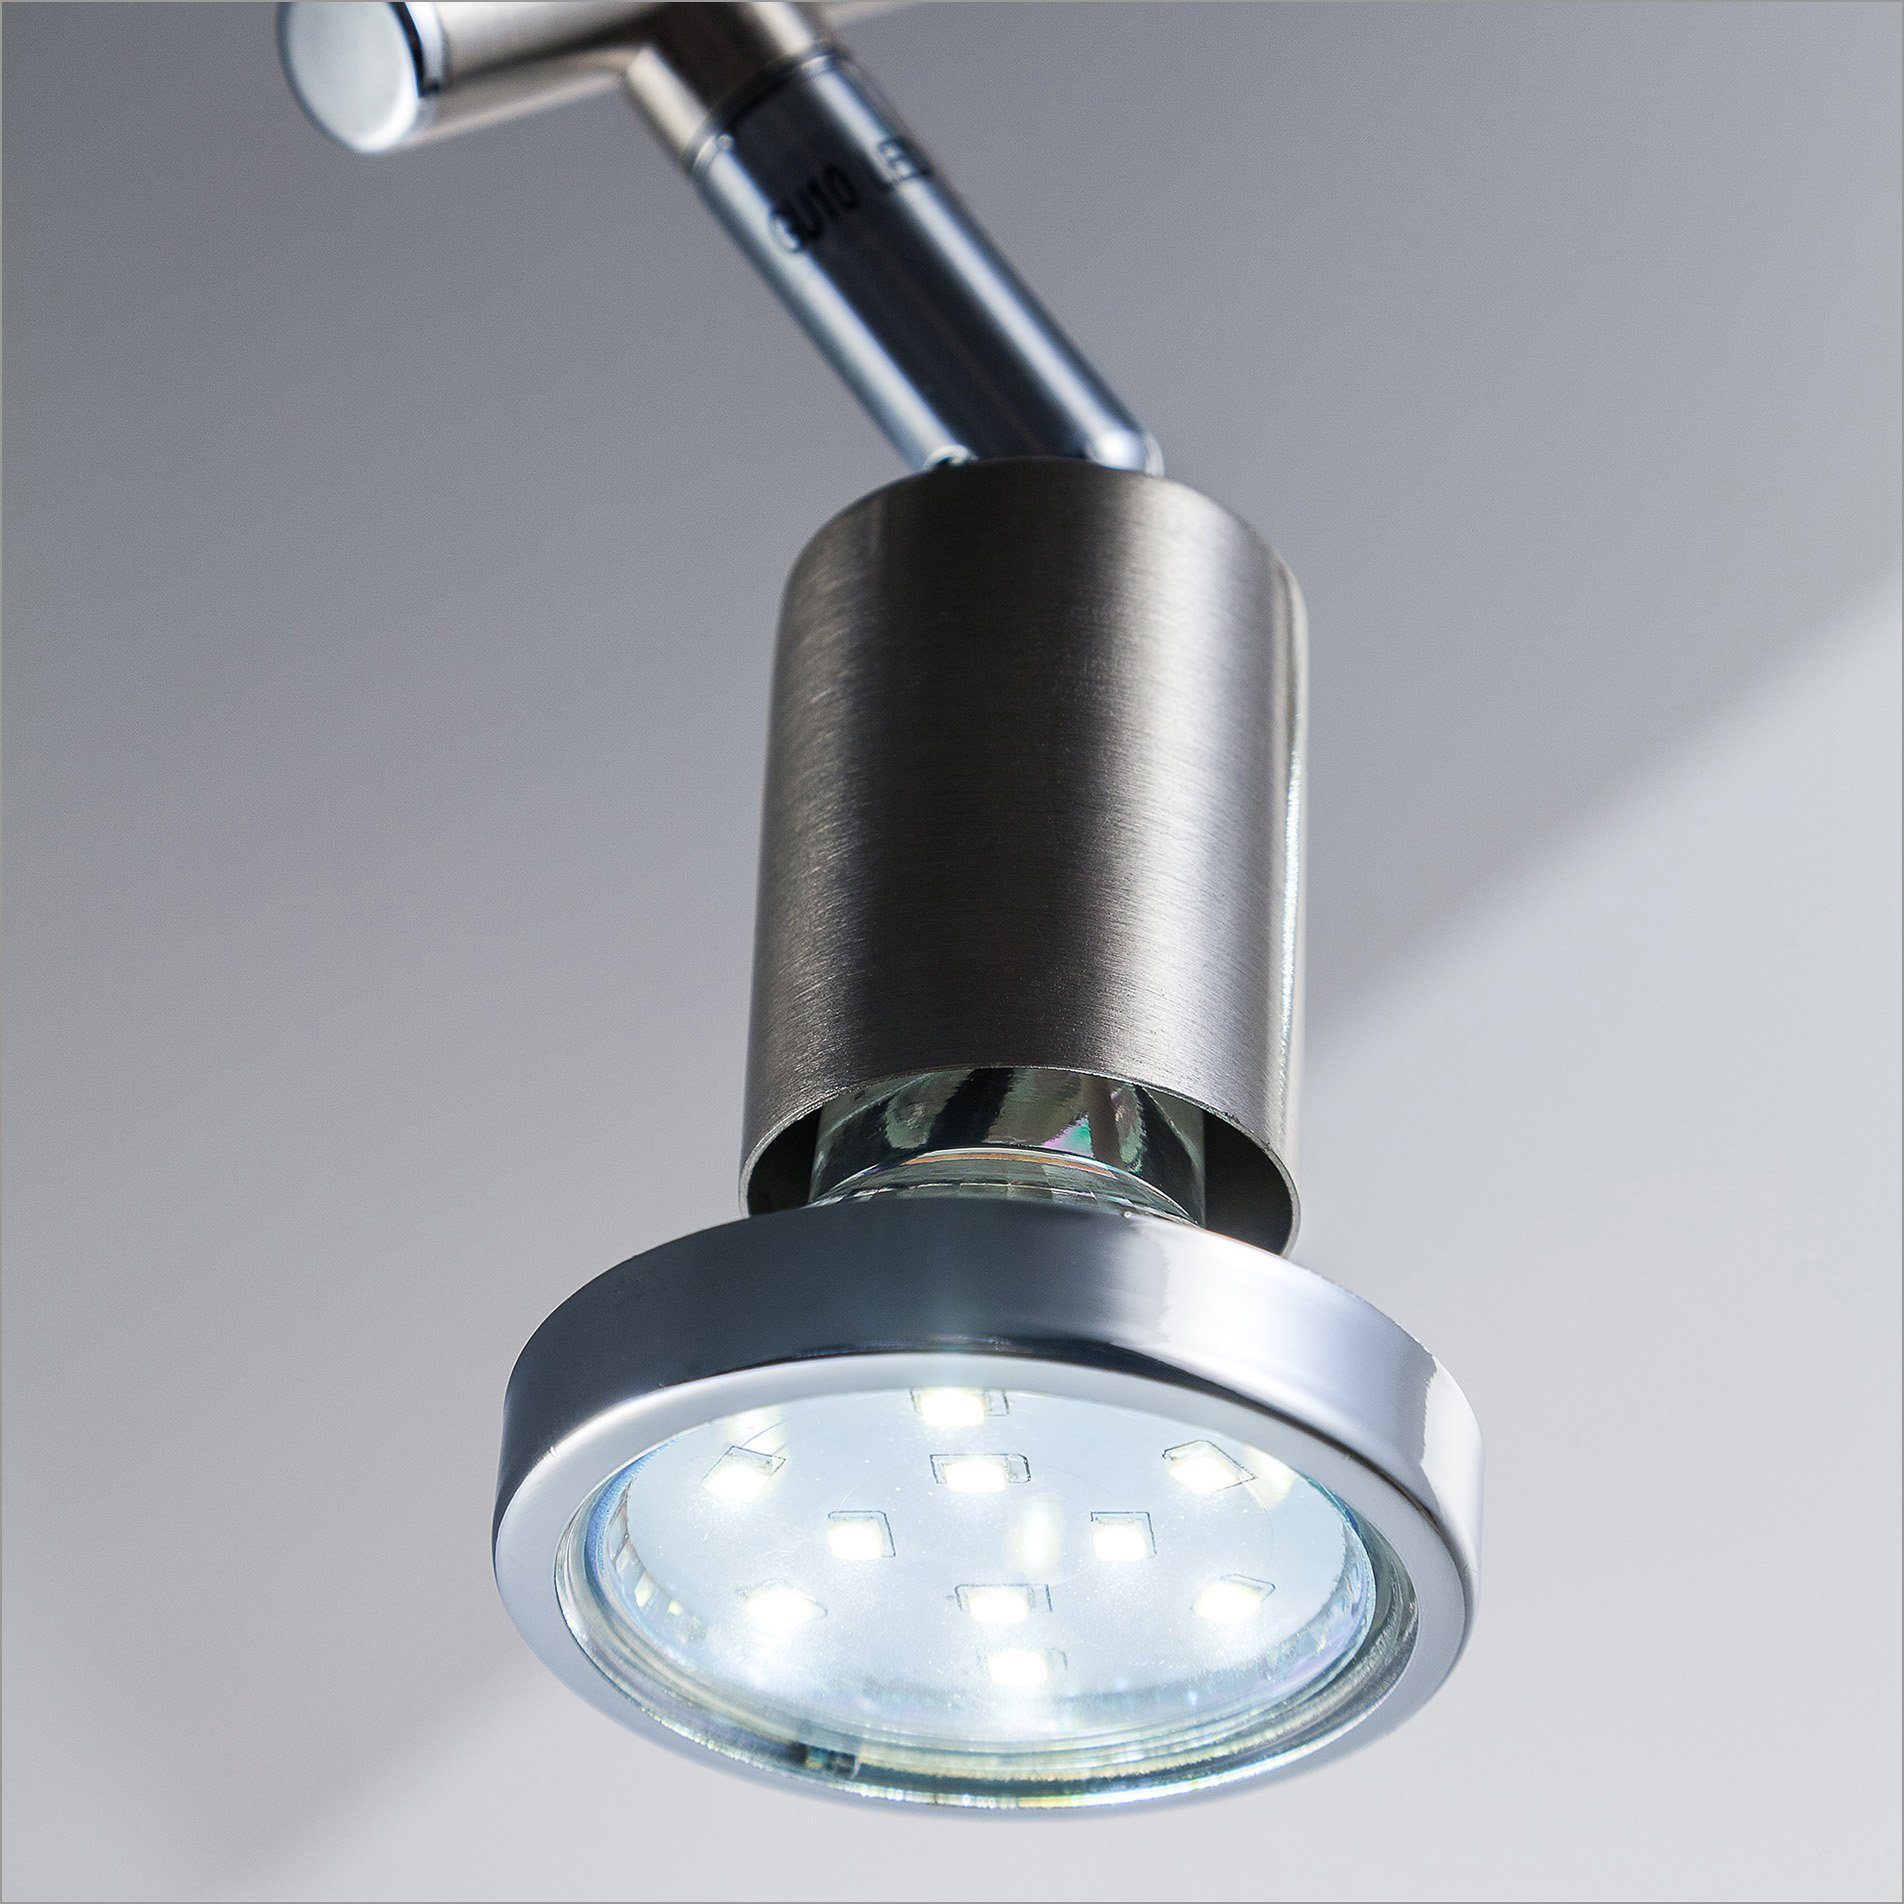 B.K.Licht LED Deckenspots Mika, LED wechselbar, Warmweiß, GU10 Deckenstrahler, warmweiß inkl. LED 250 Lumen, schwenkbar, 3W